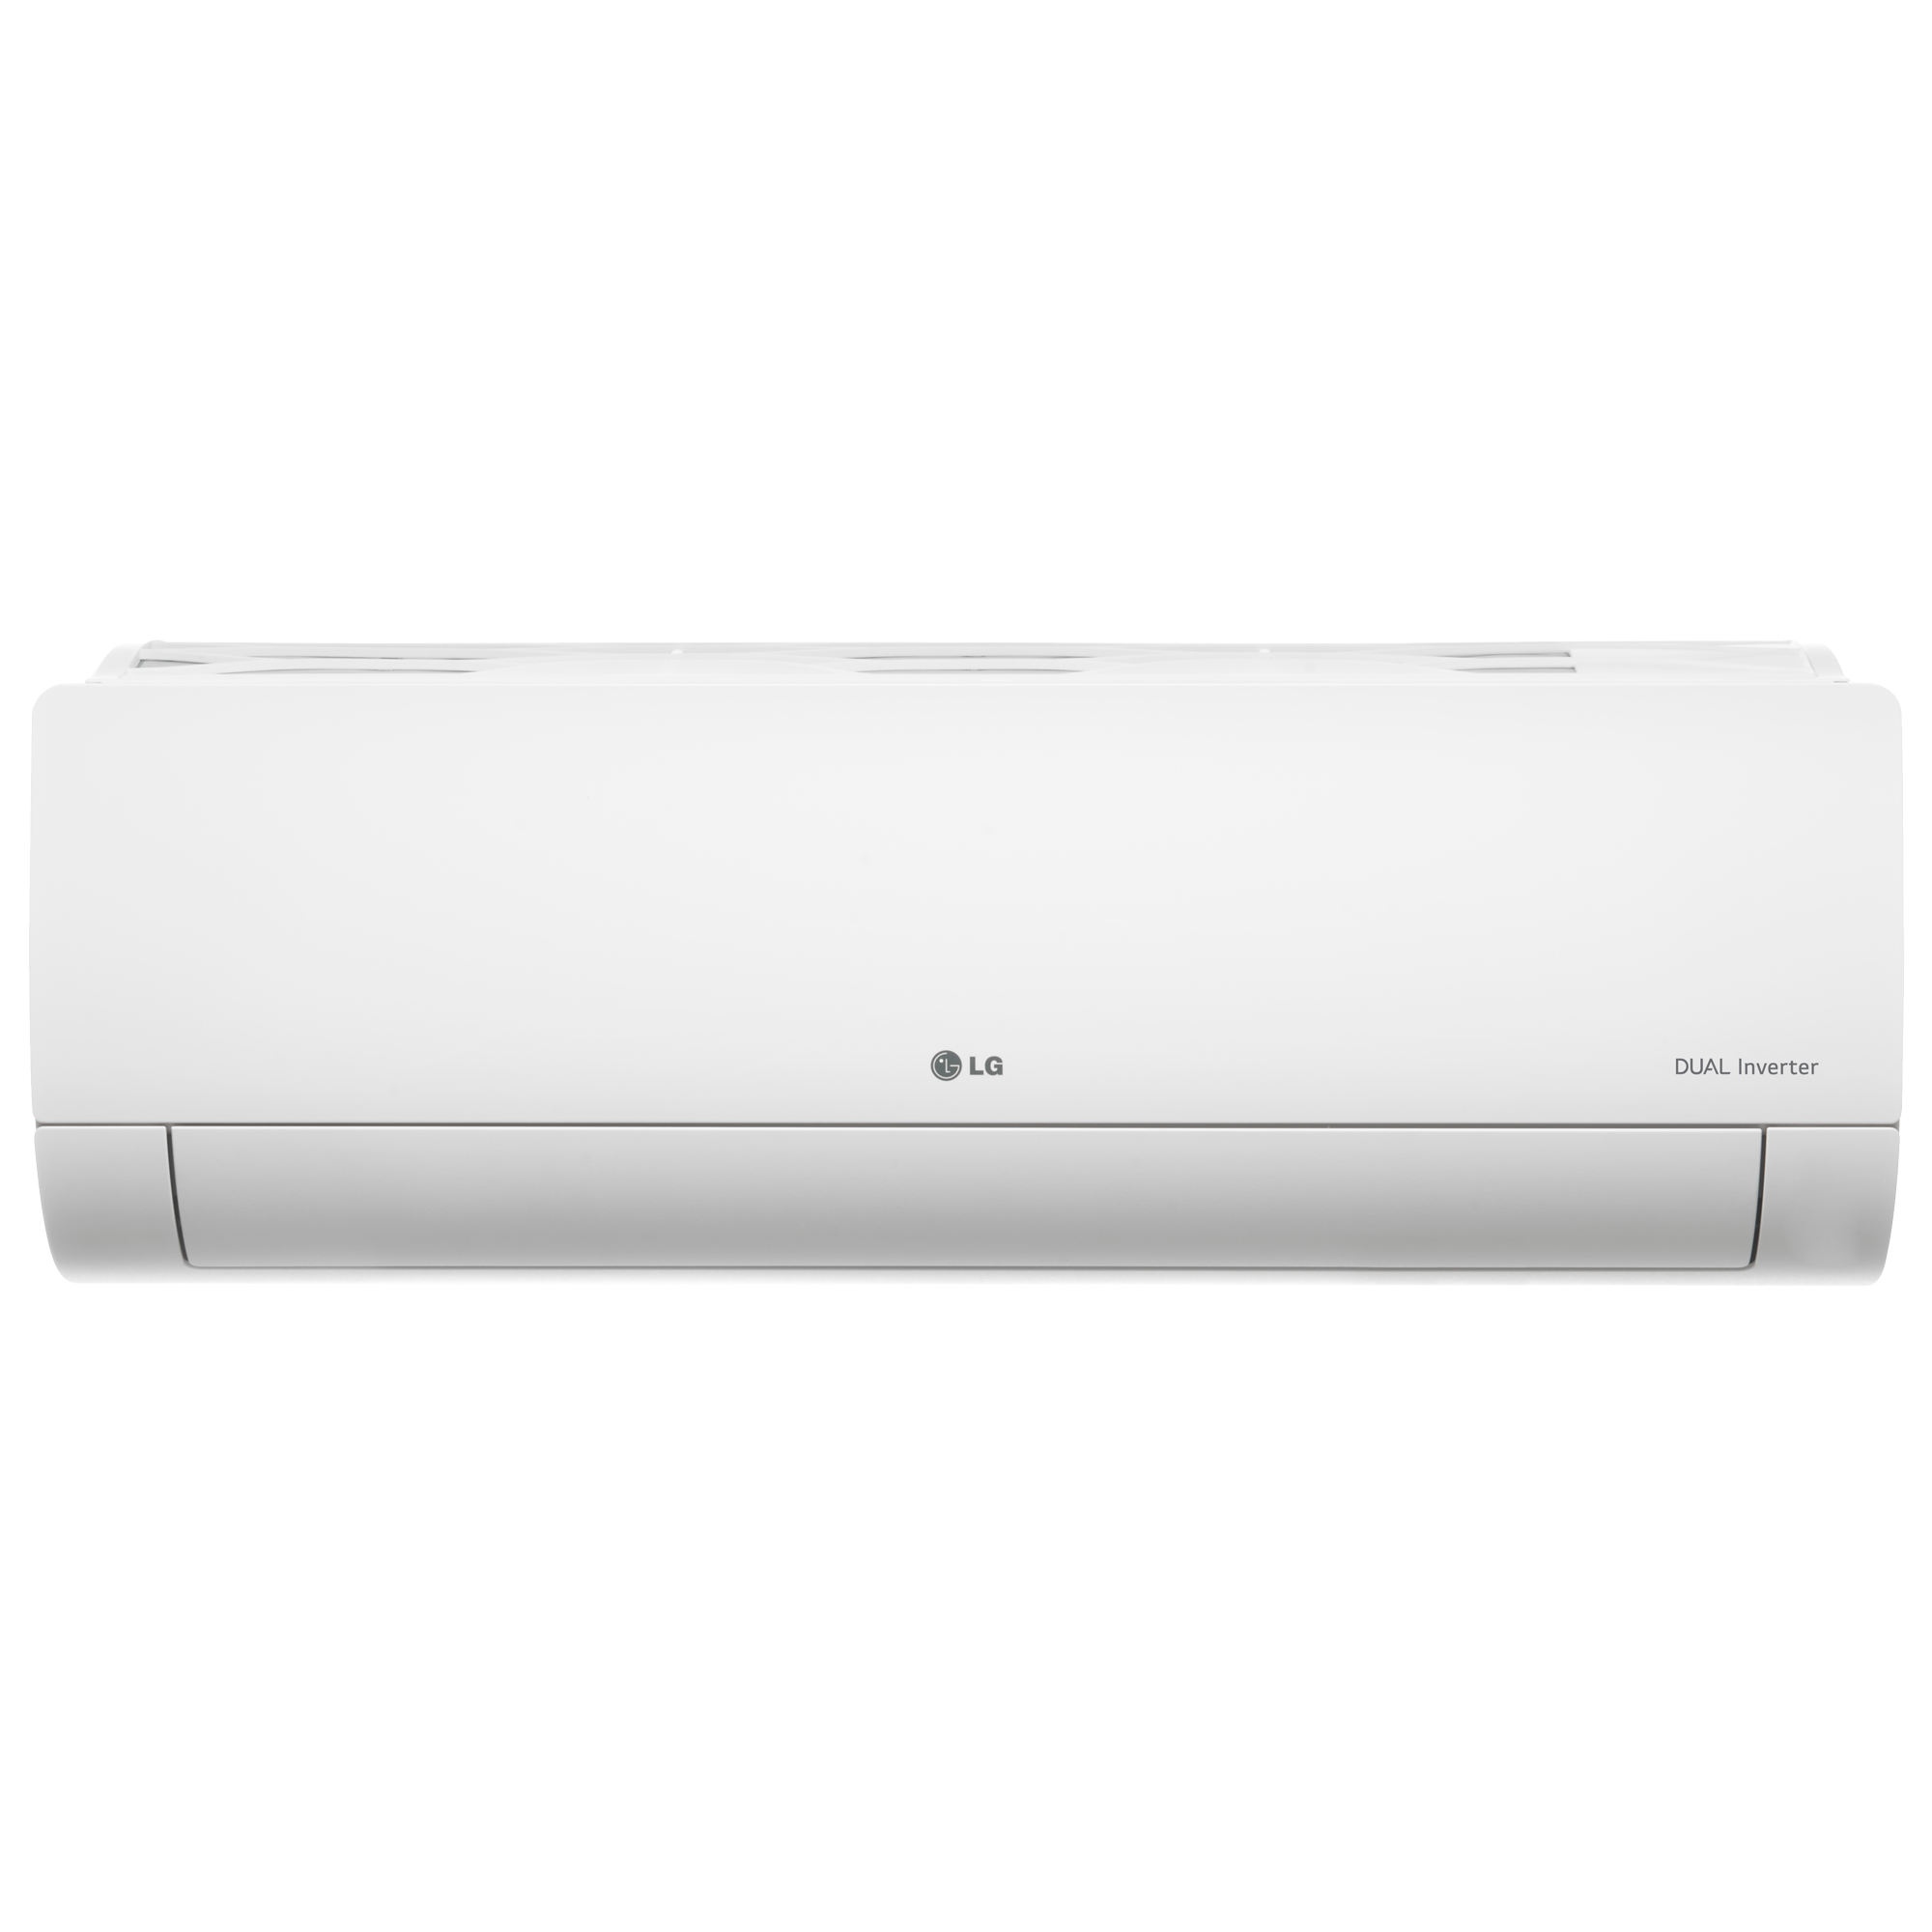 LG 1 Ton 5 Star Inverter Split AC (Air Purification Function, Copper Condenser, MS-Q12UVZA, White)_1